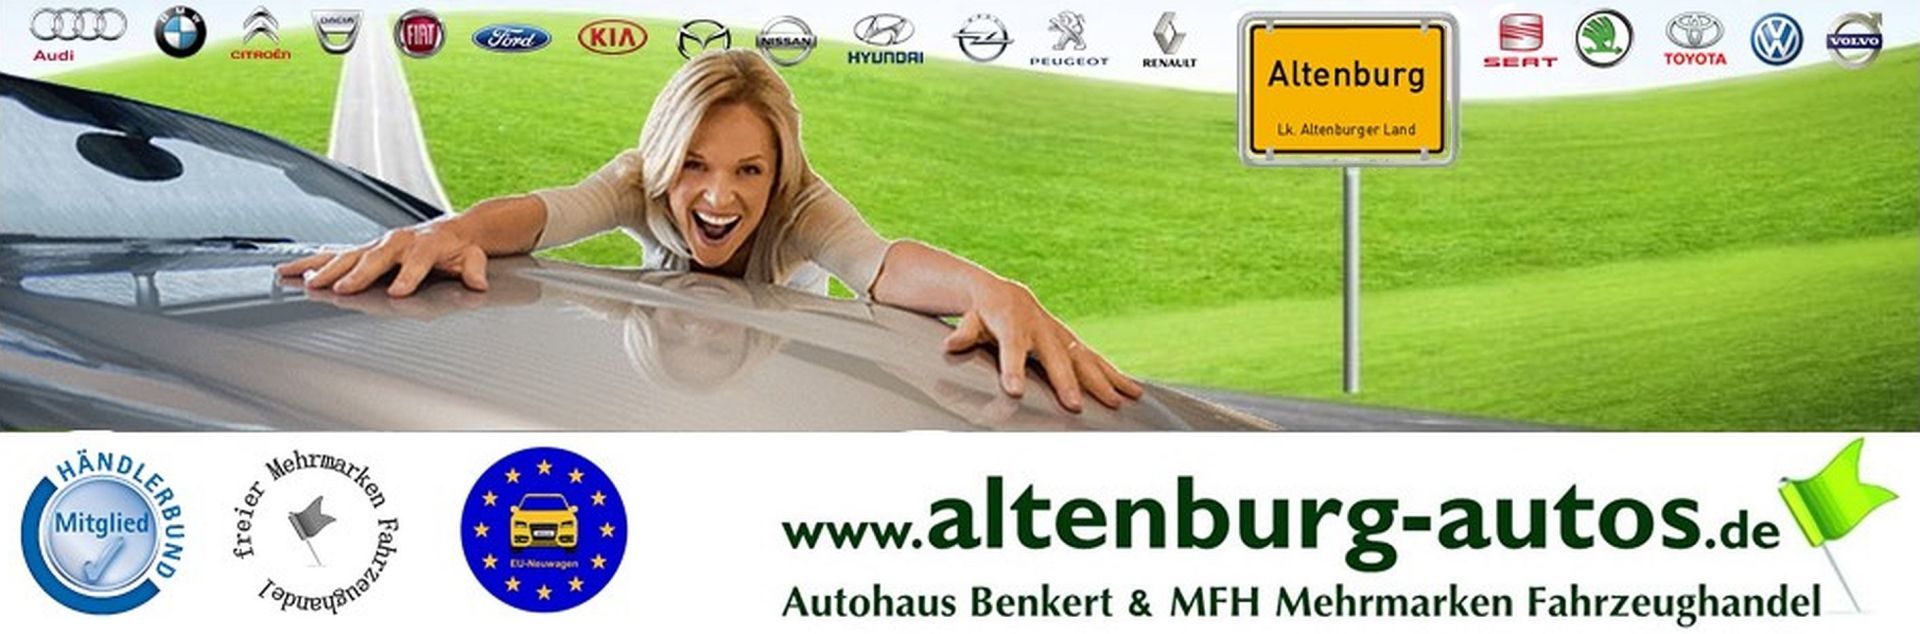 Altenburg-Autos  EU Fahrzeuge im Altenburger Land